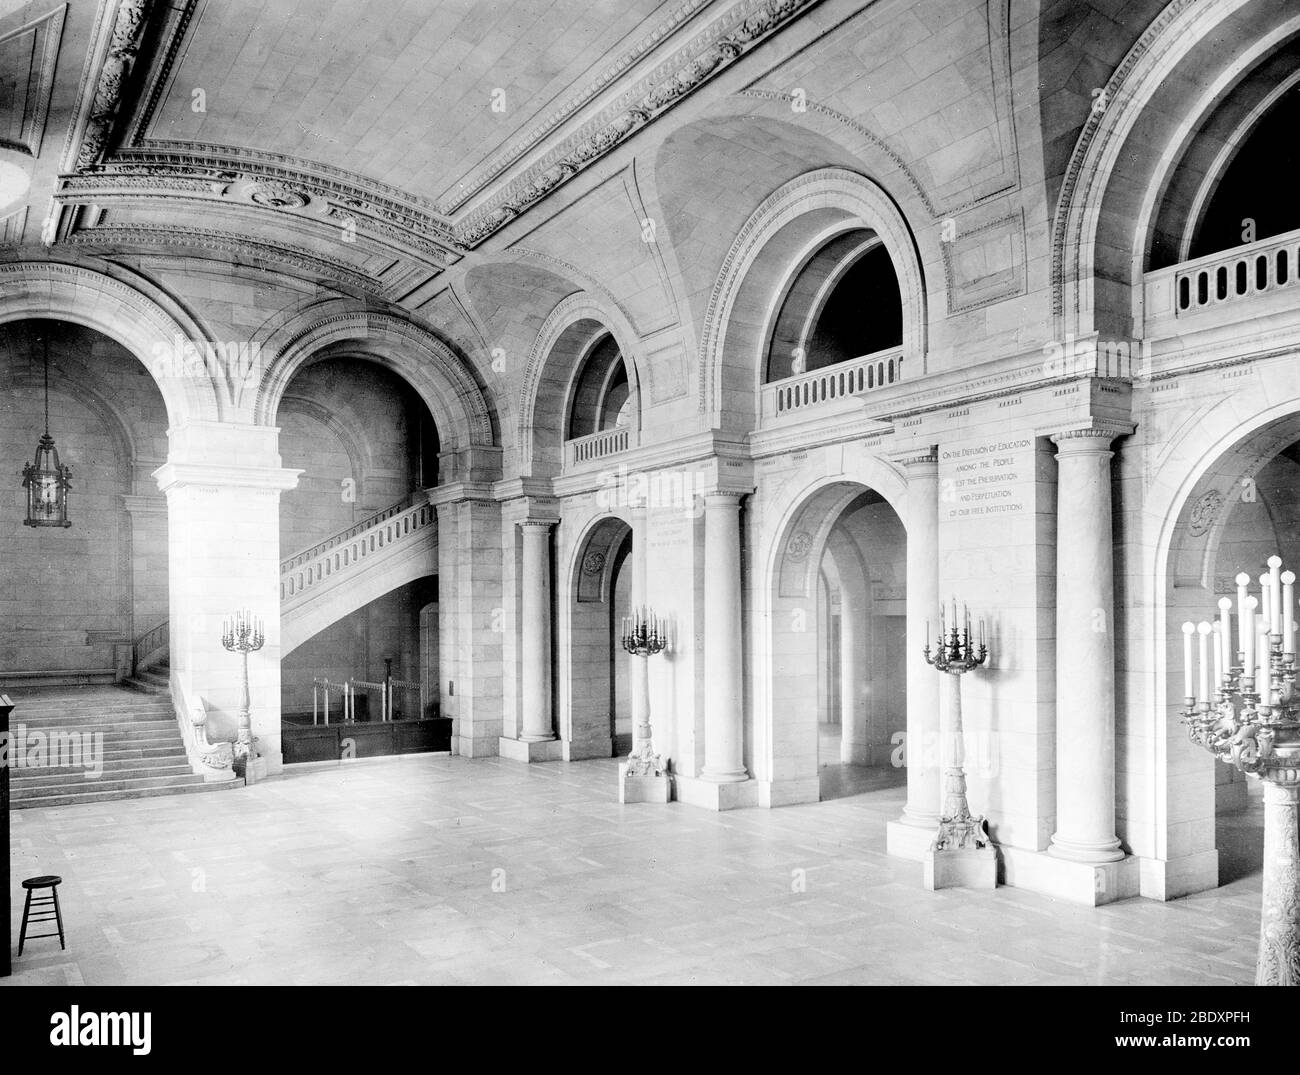 NYPL, Hauptniederlassung, Eingangshalle, 1910 Stockfoto